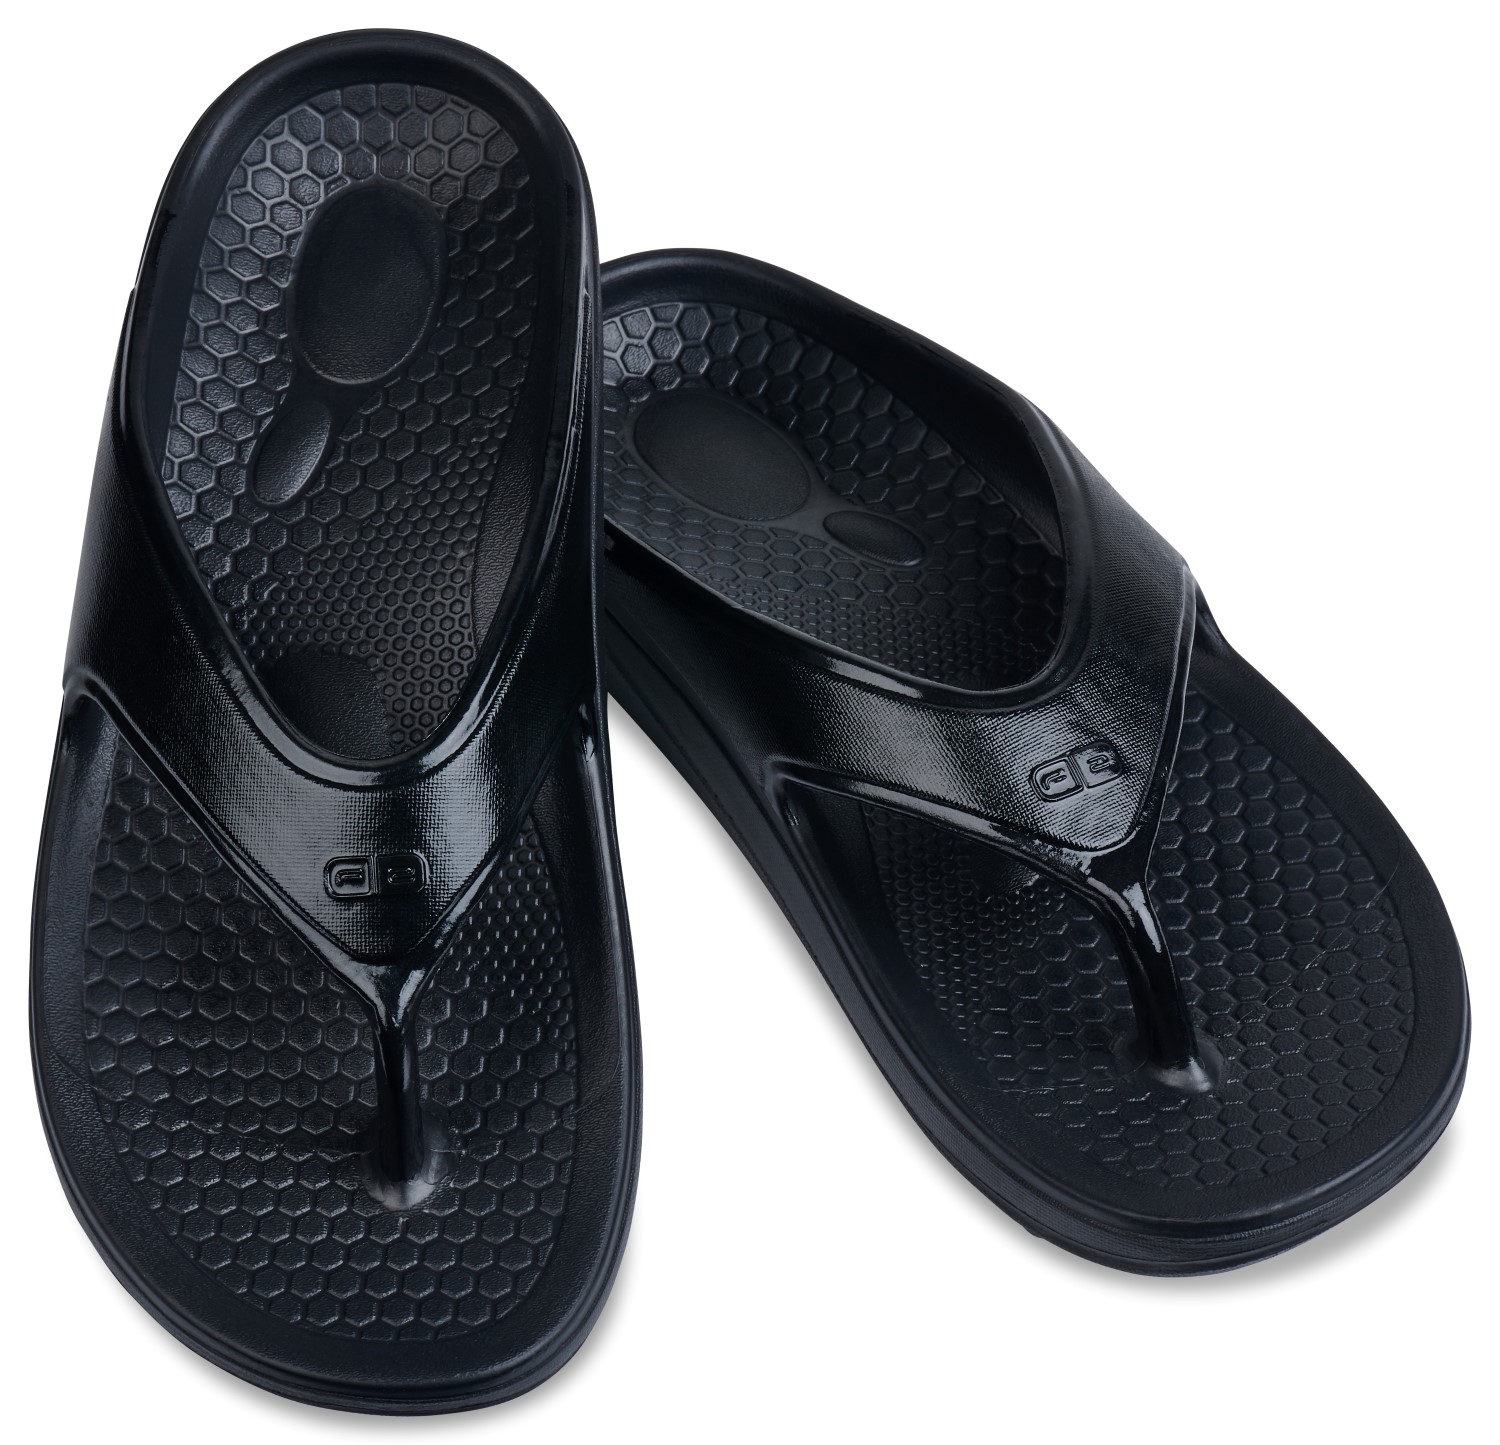 Spenco Fusion 2.0 Men's Soft Foam Recovery Thong Sandals Black ALLSizes